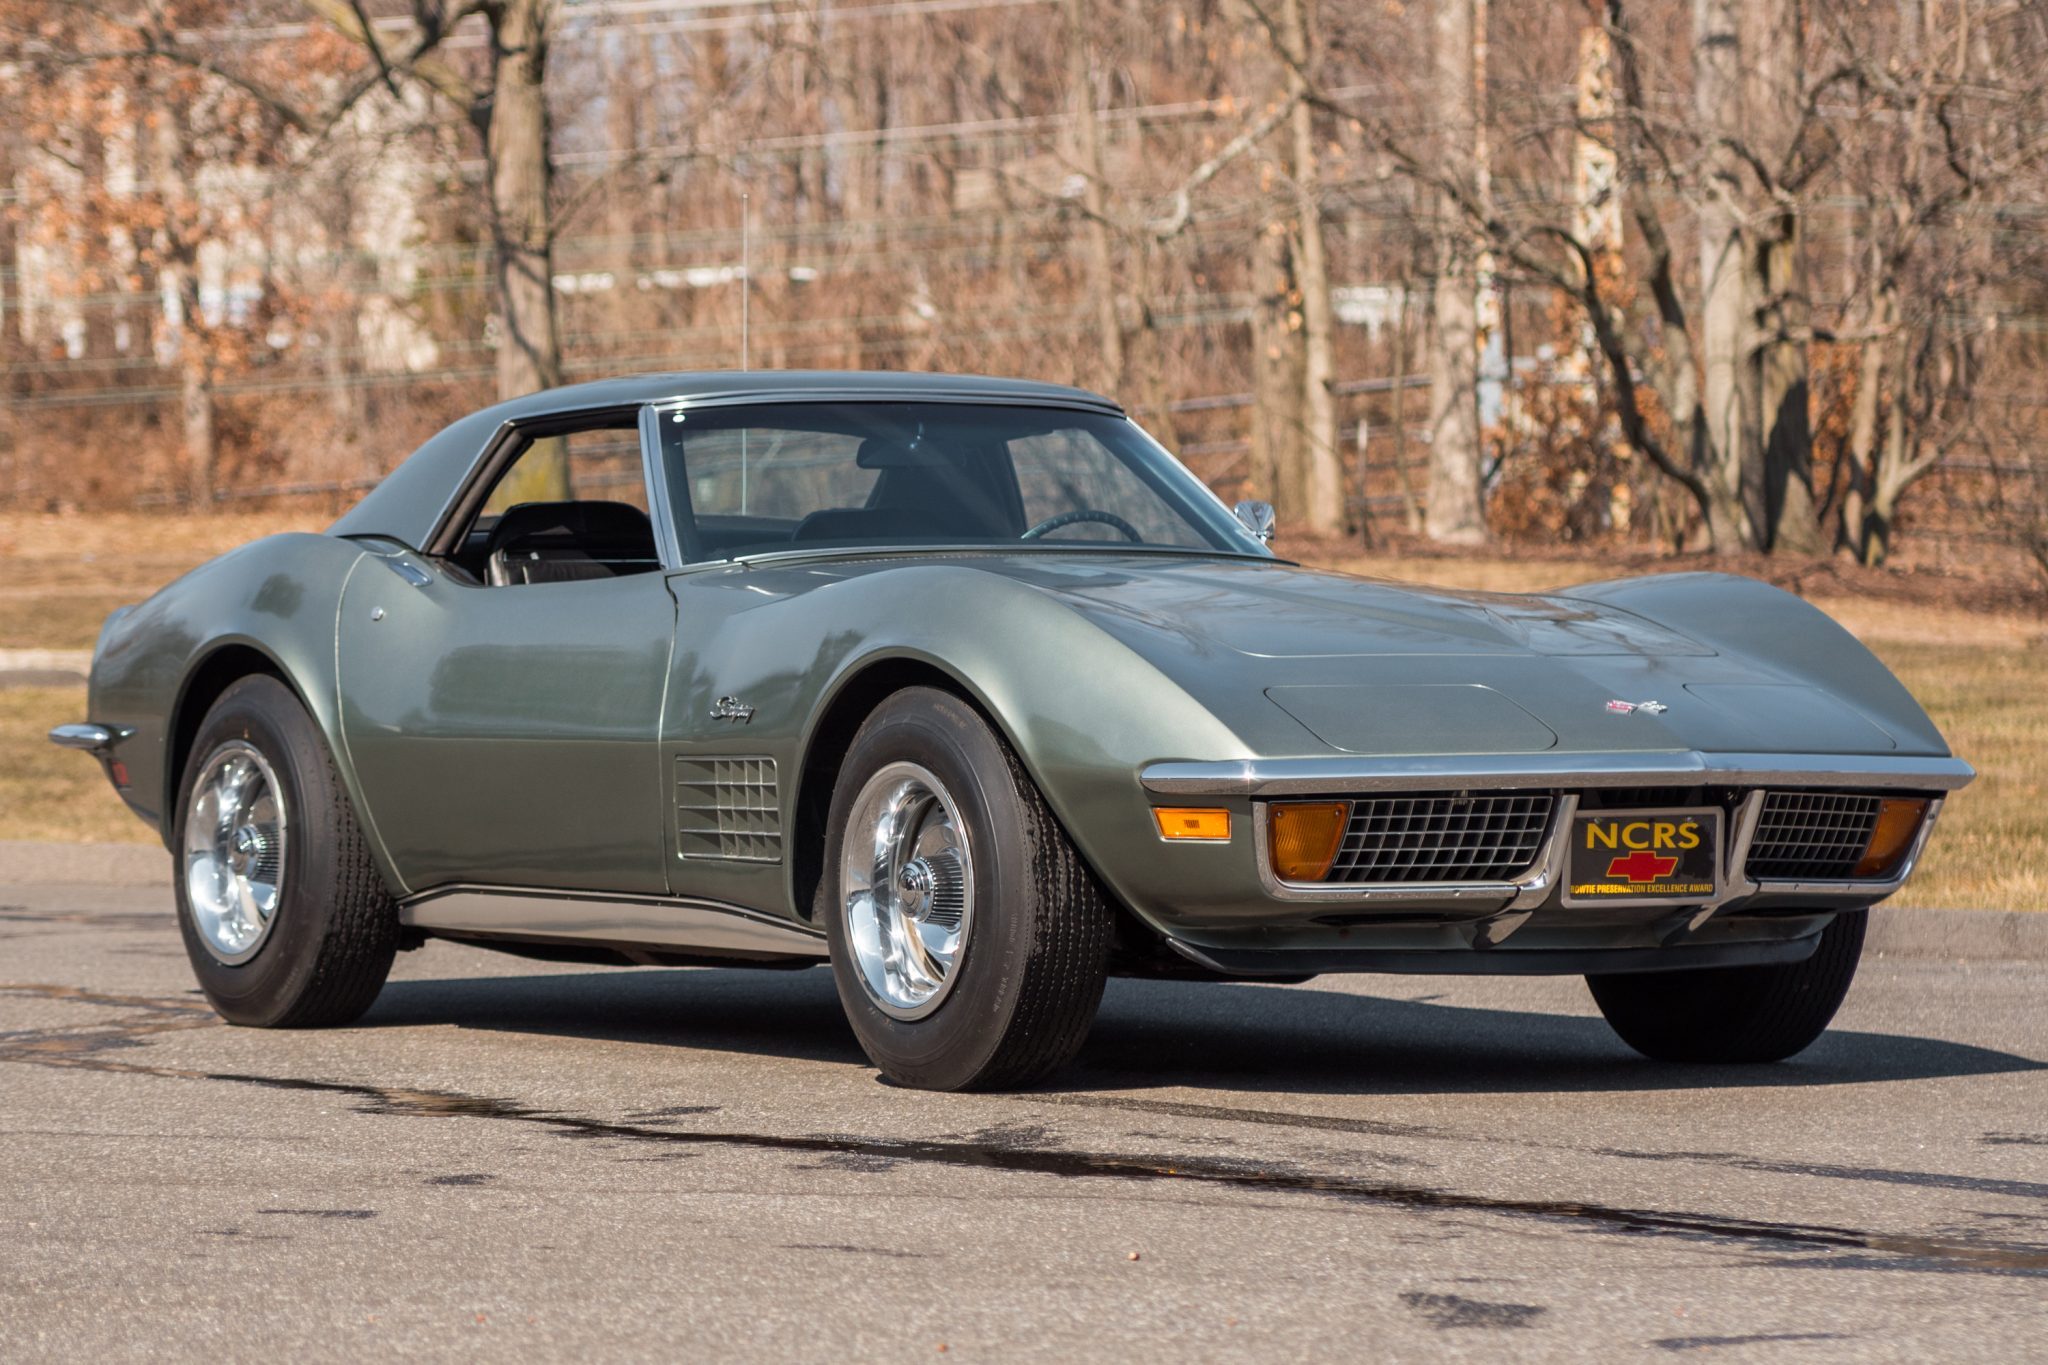 https://s1.cdn.autoevolution.com/images/news/mint-1972-chevrolet-corvette-looks-sharp-in-rare-steel-cities-gray-color-158632_1.jpg